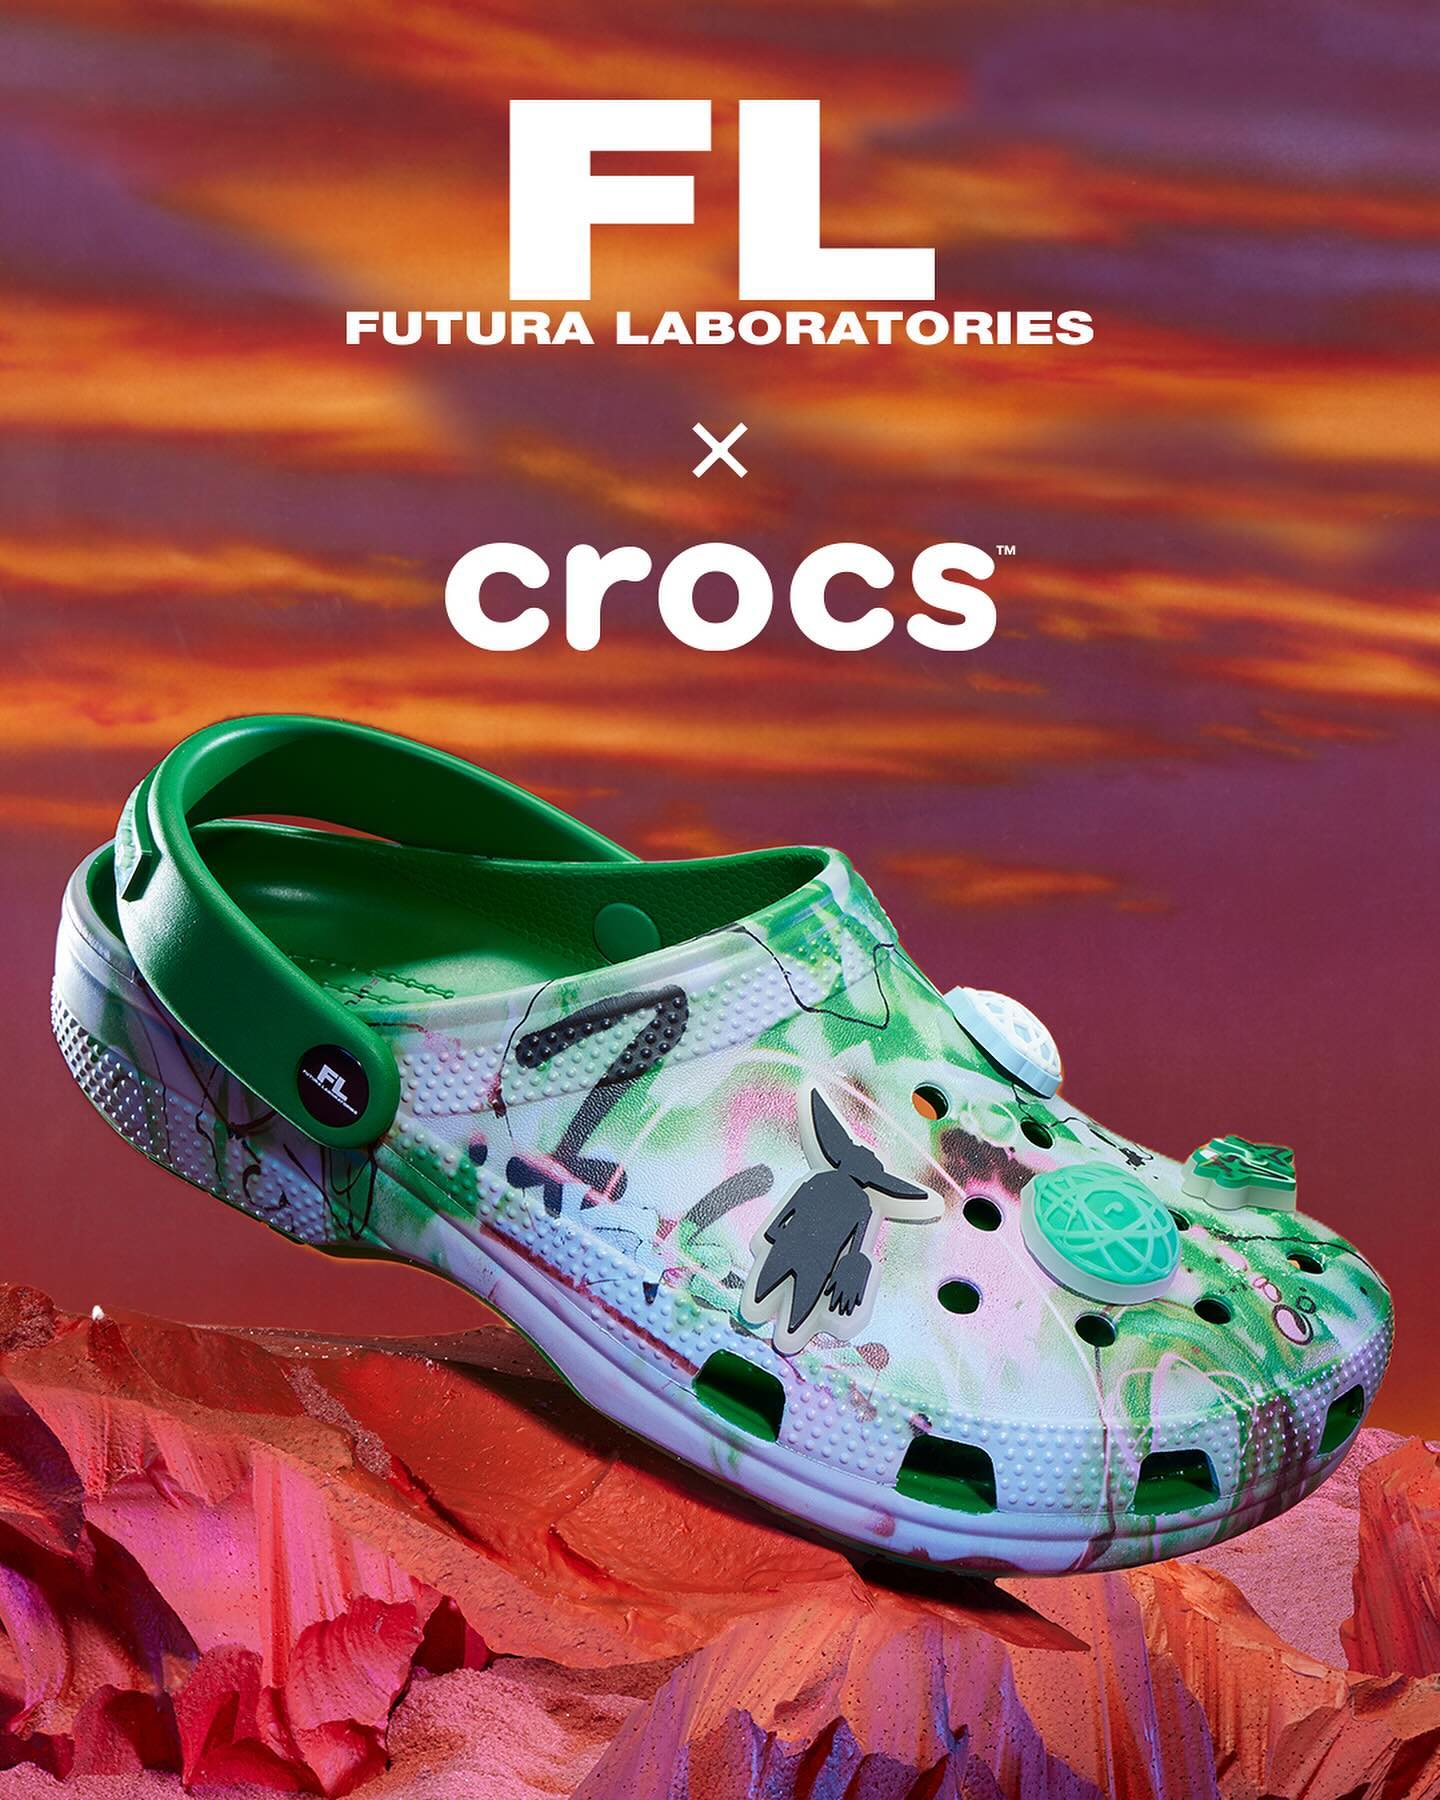  Date de sortie de la collection Crocs des Laboratoires Futura